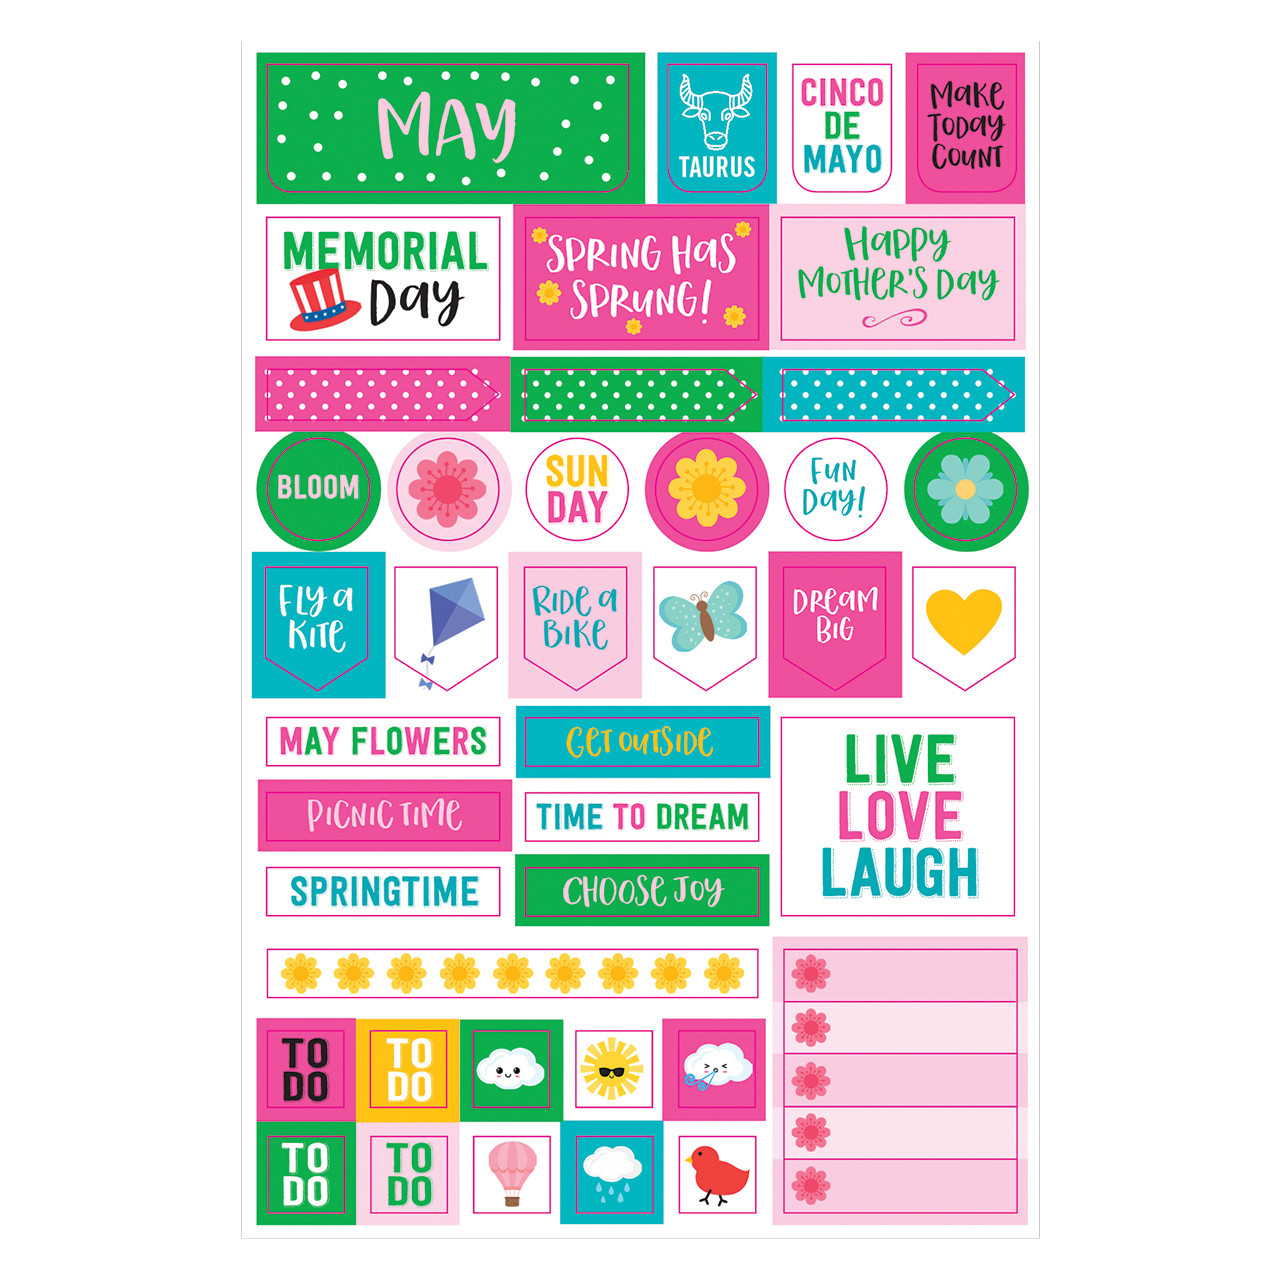 Calendar Stickers - Franklin Planner